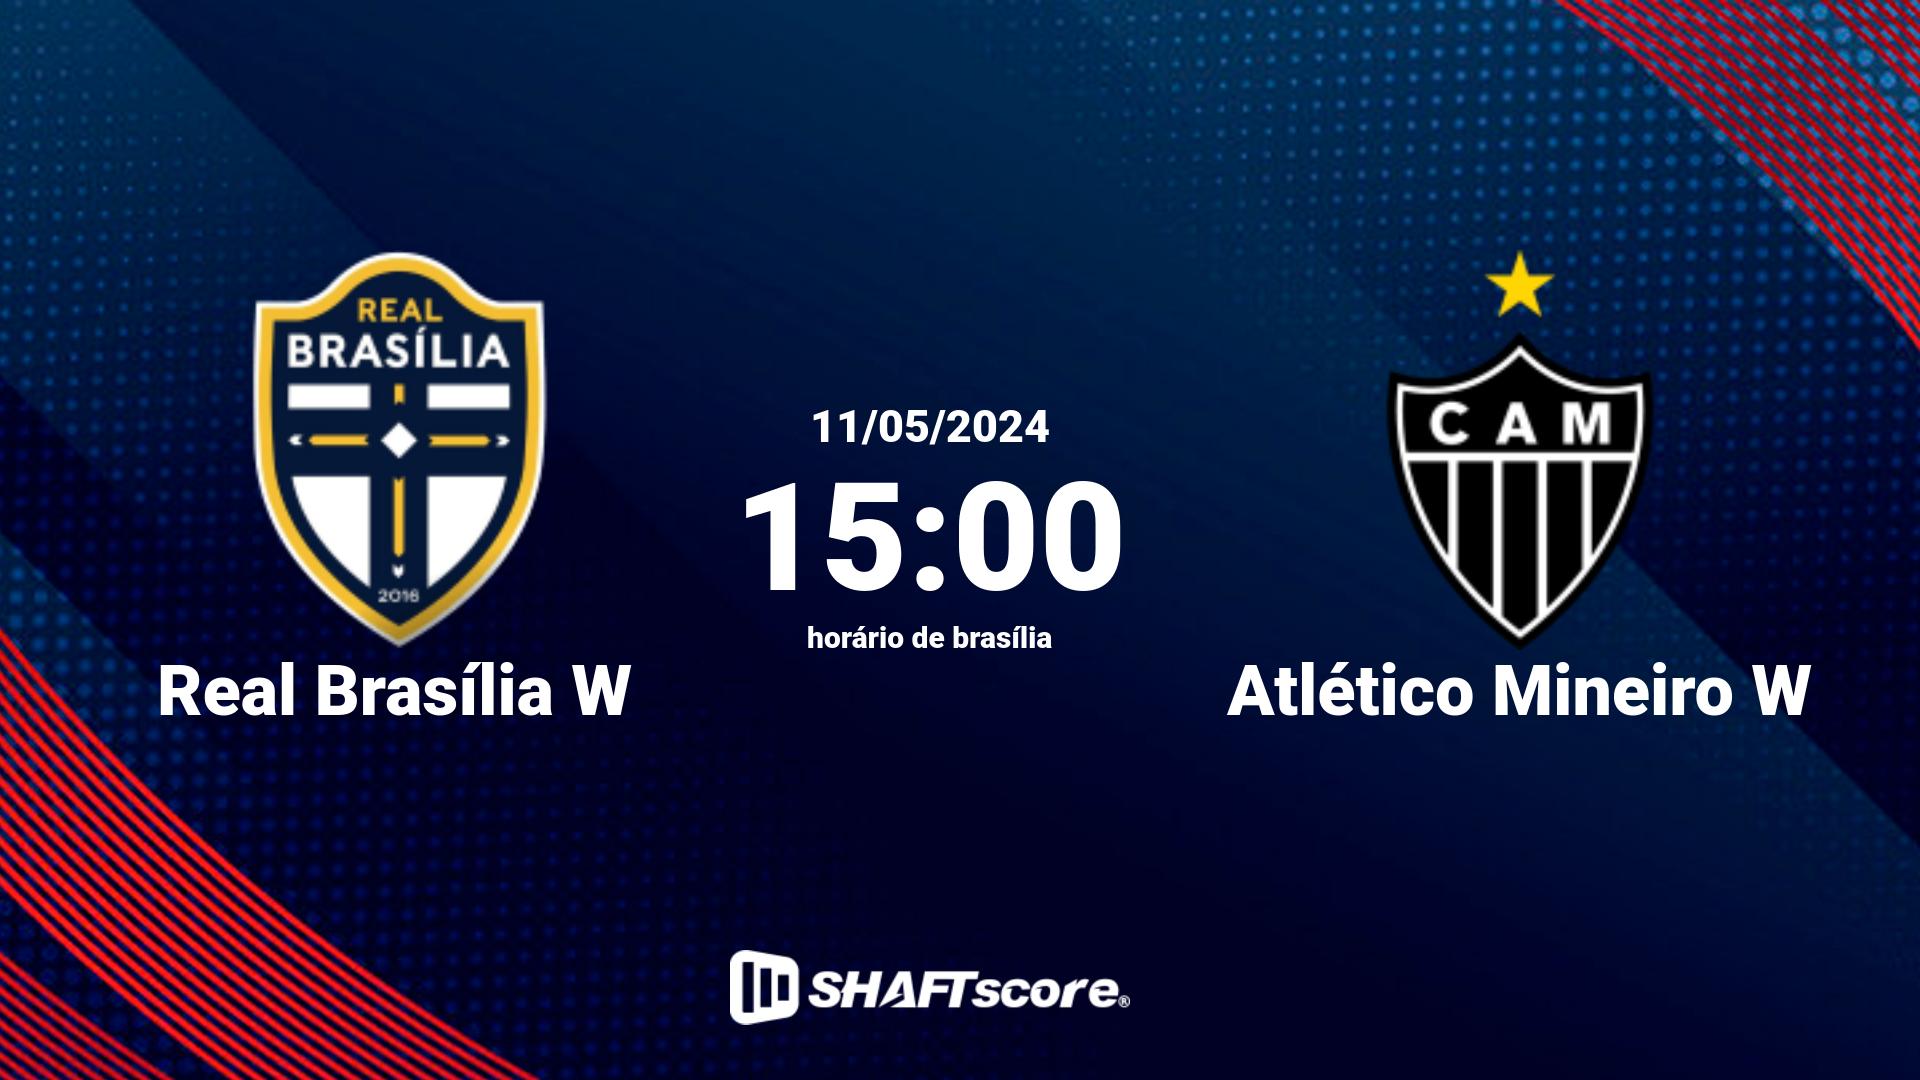 Estatísticas do jogo Real Brasília W vs Atlético Mineiro W 11.05 15:00